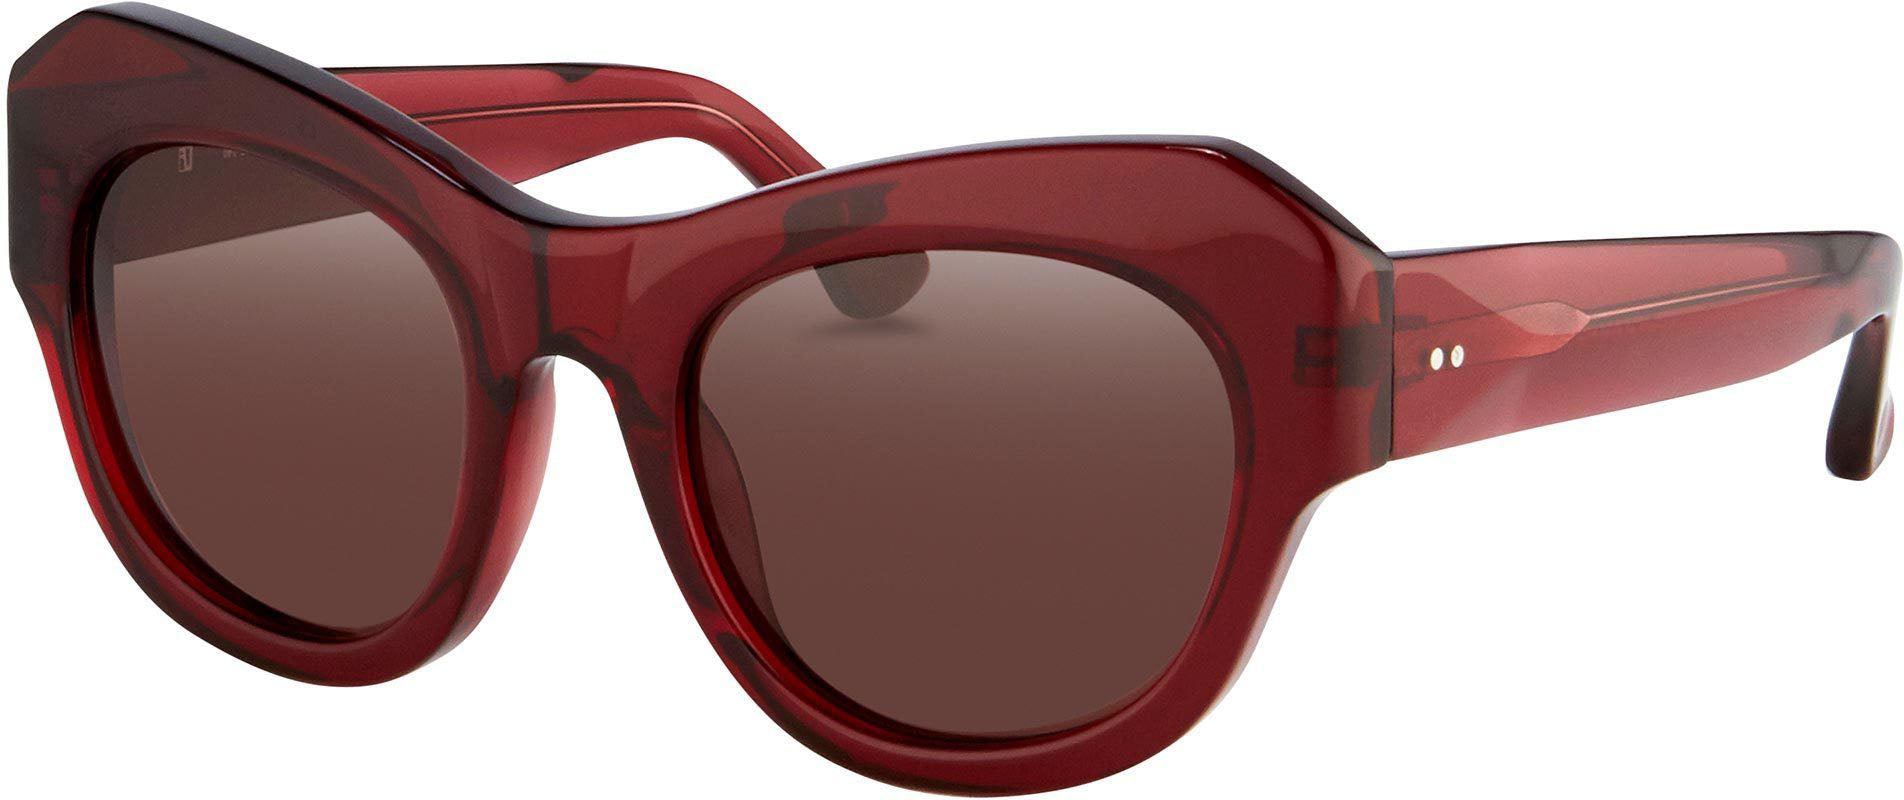 Color_DVN99C1SUN - Dries van Noten 99 C1 Angular Sunglasses